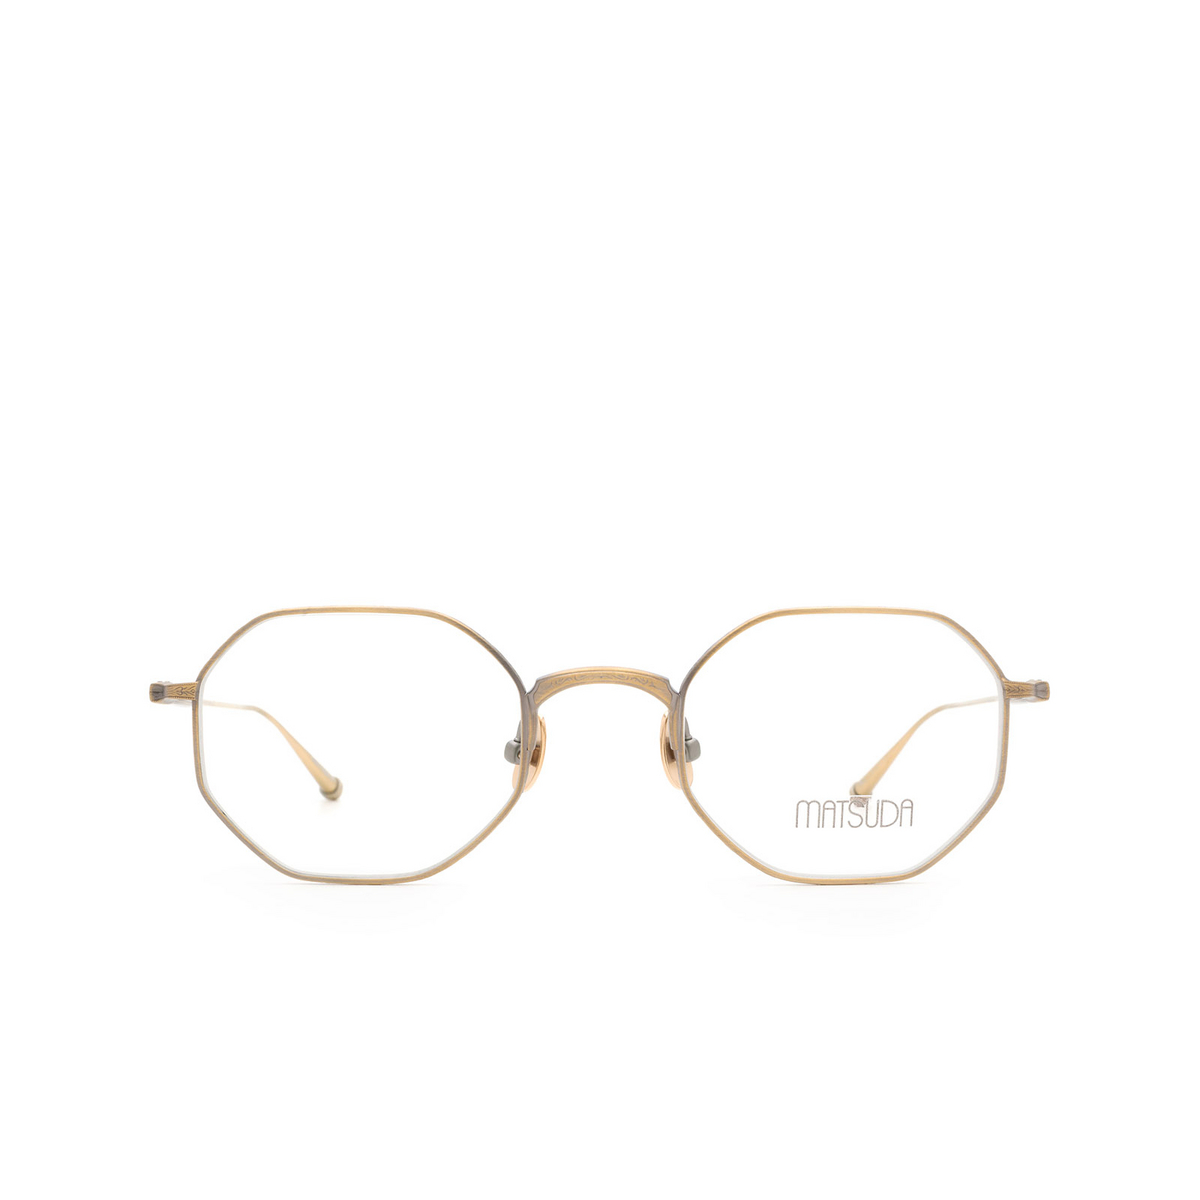 Matsuda® Square Eyeglasses: M3086 OPT color Antique Gold Ag - front view.